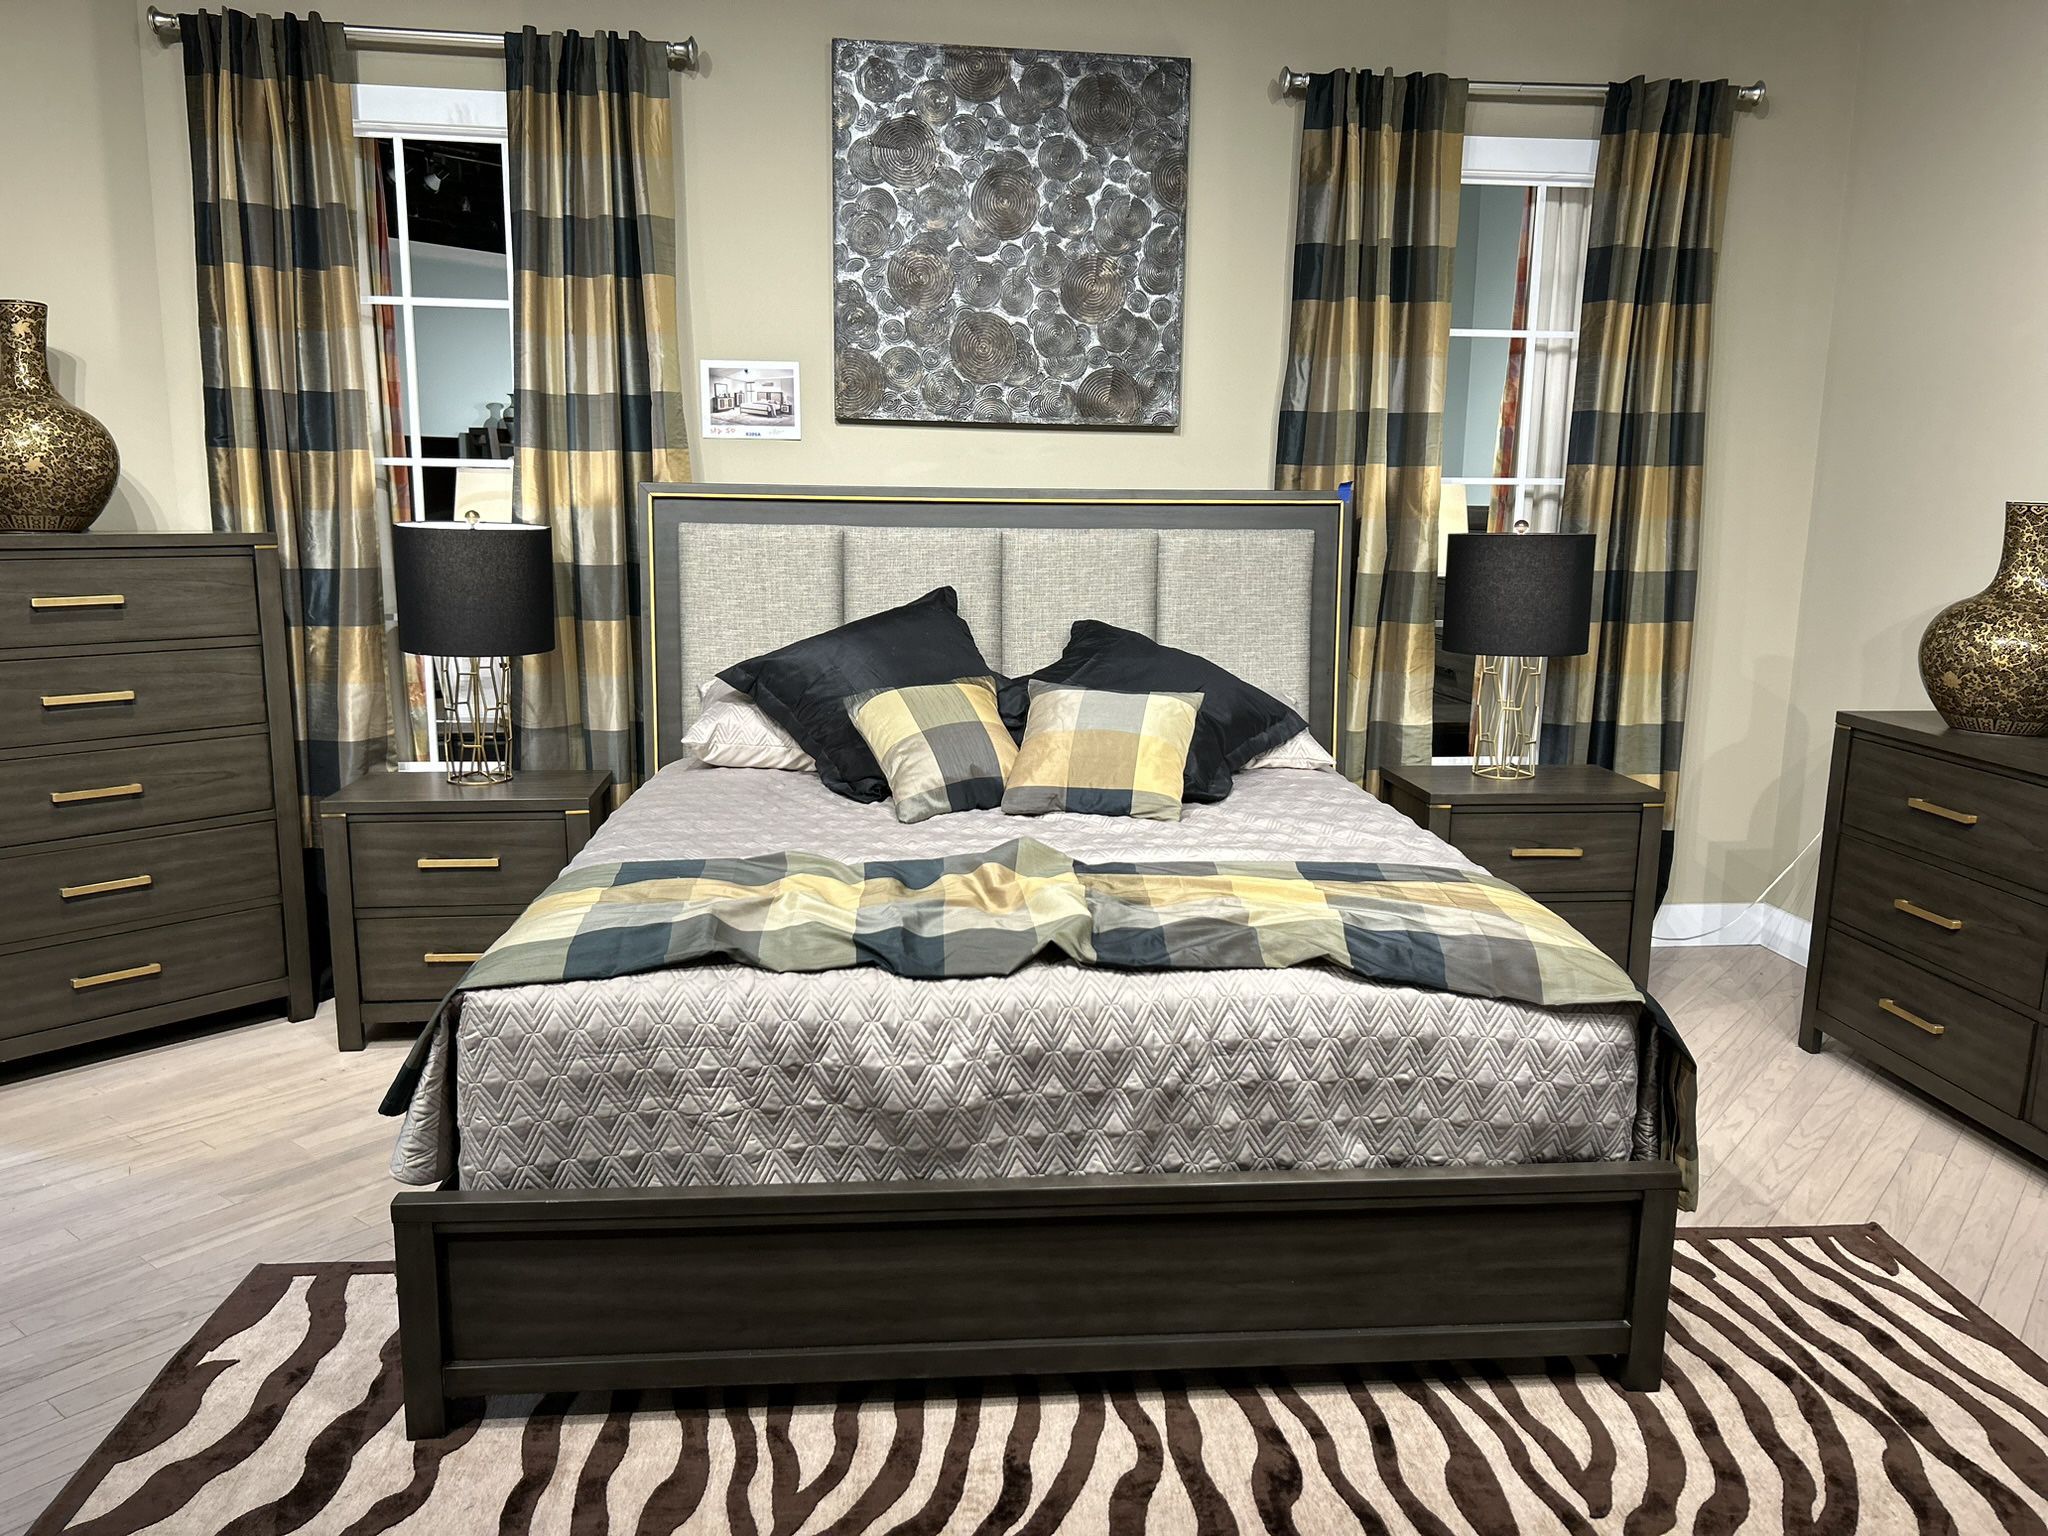 New King Bedroom Set